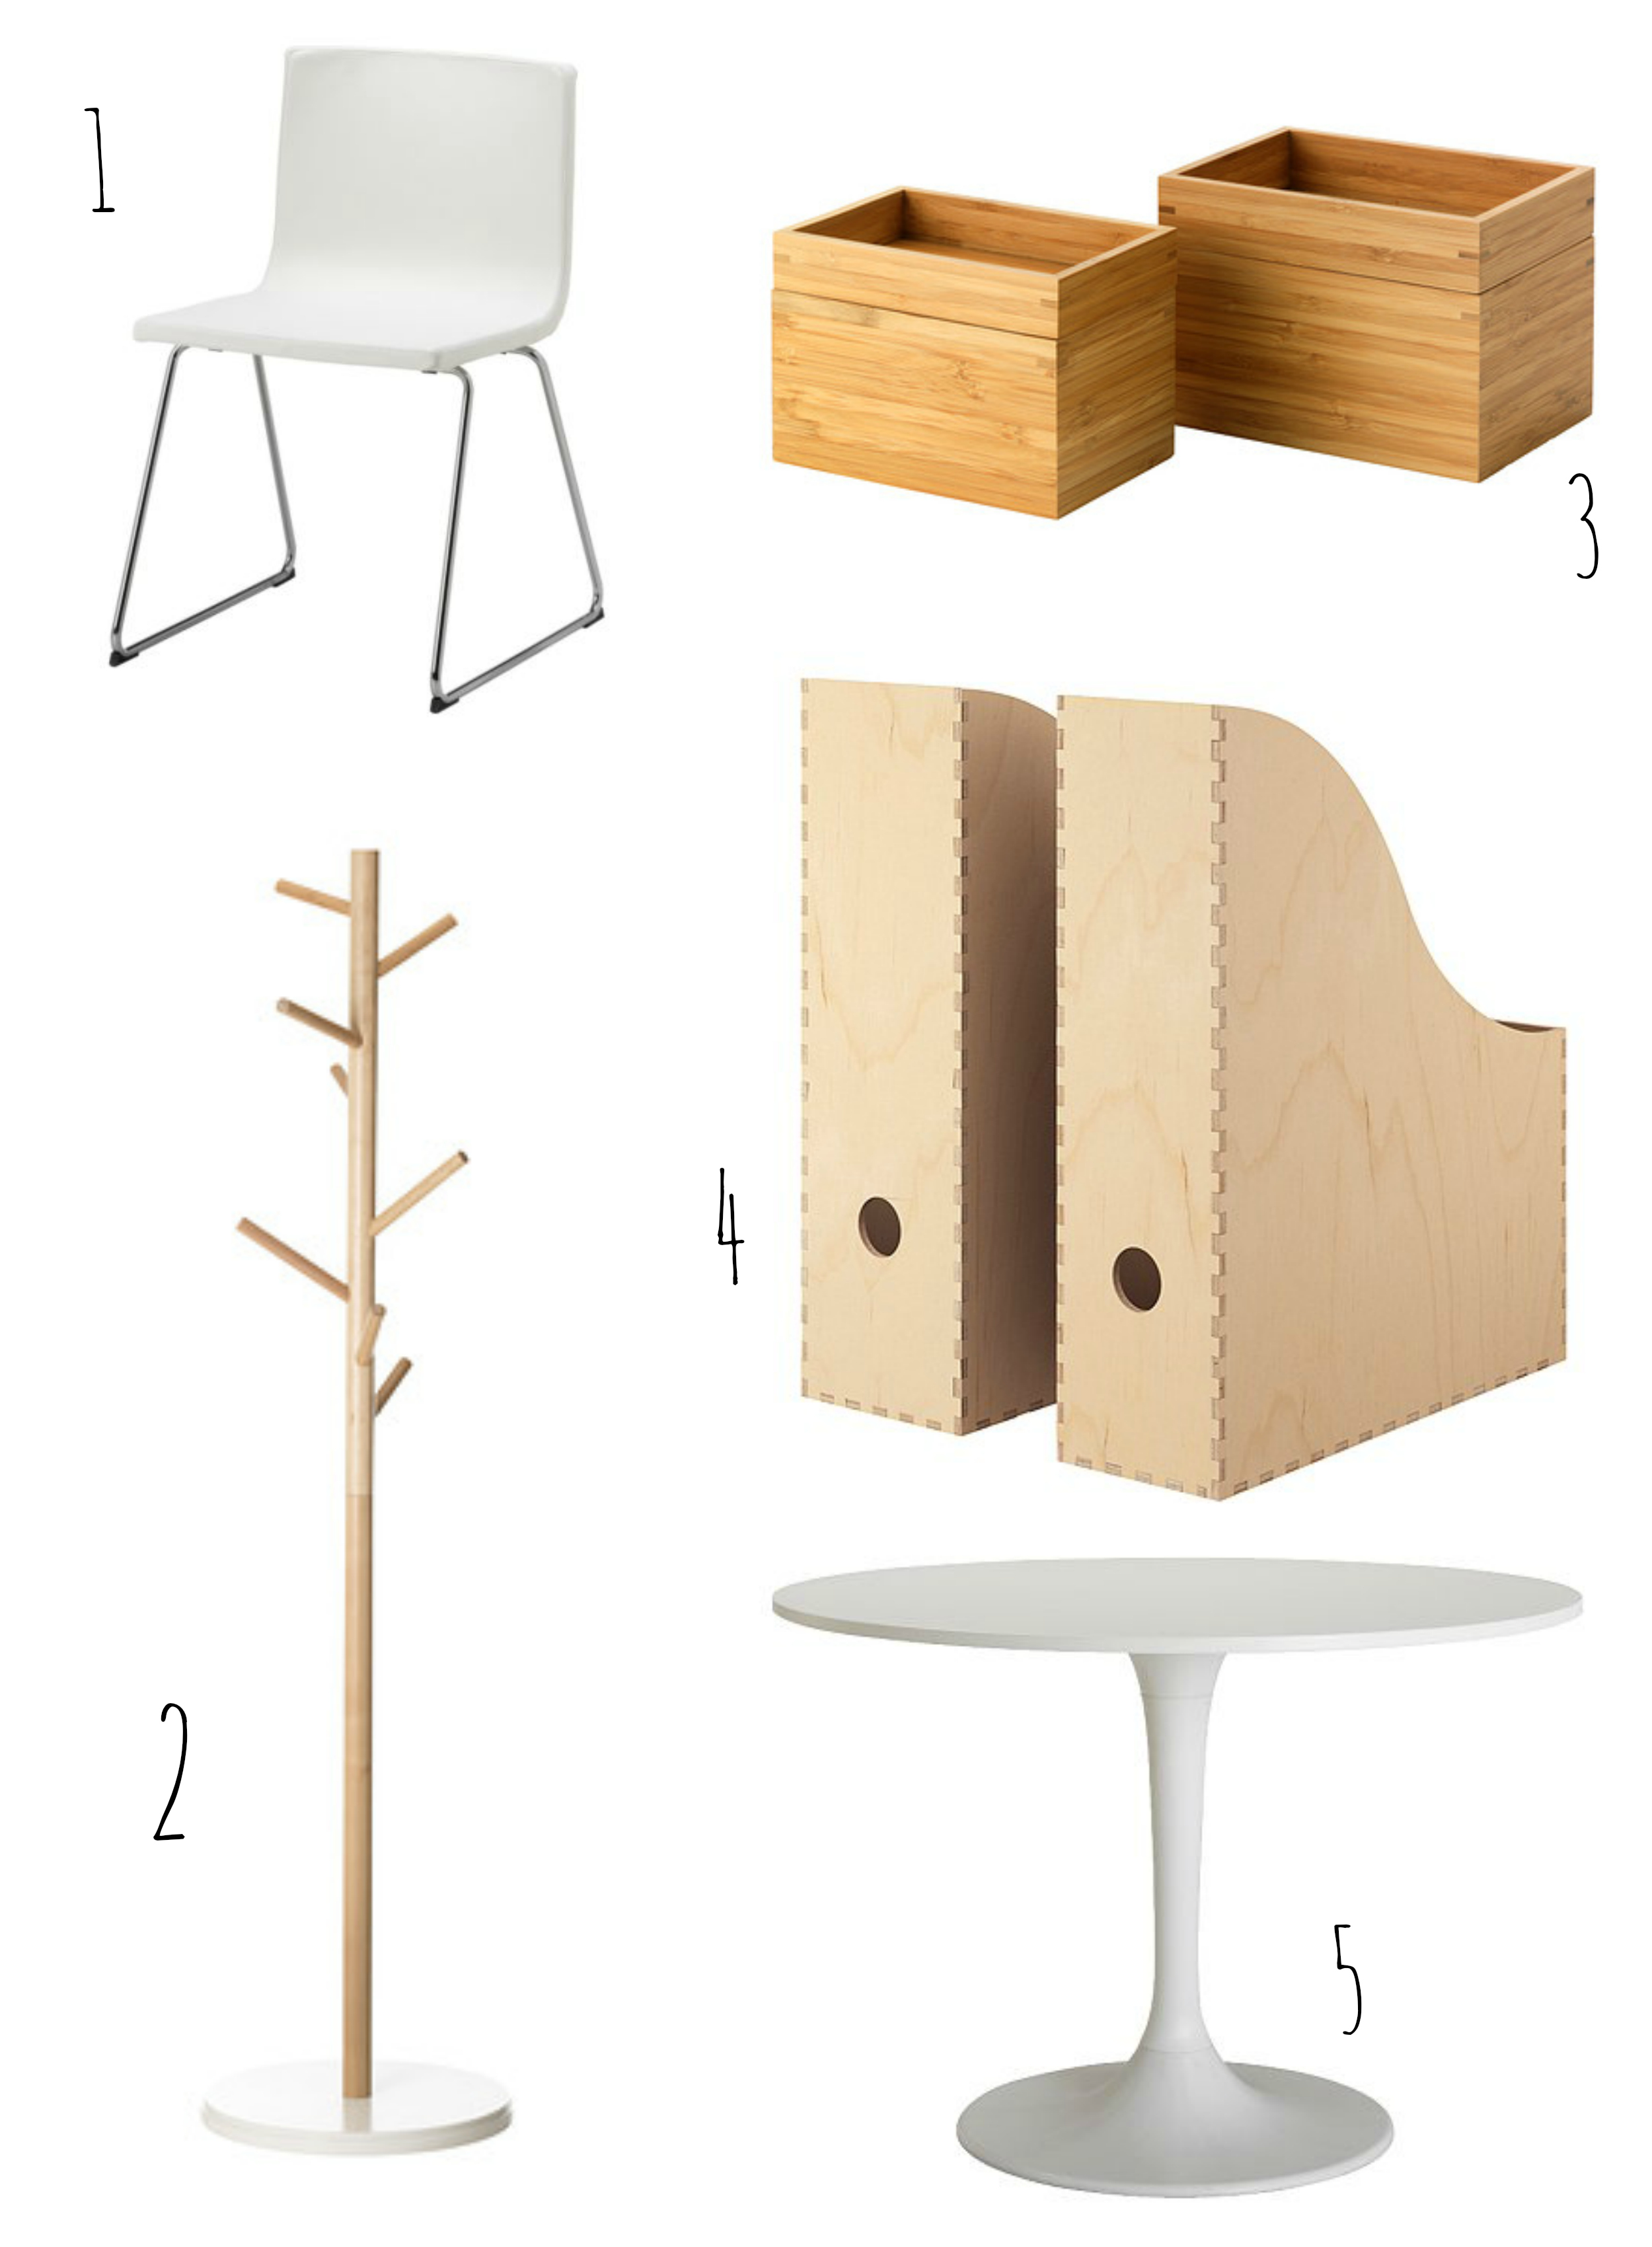 decoaddict: IKEA basics